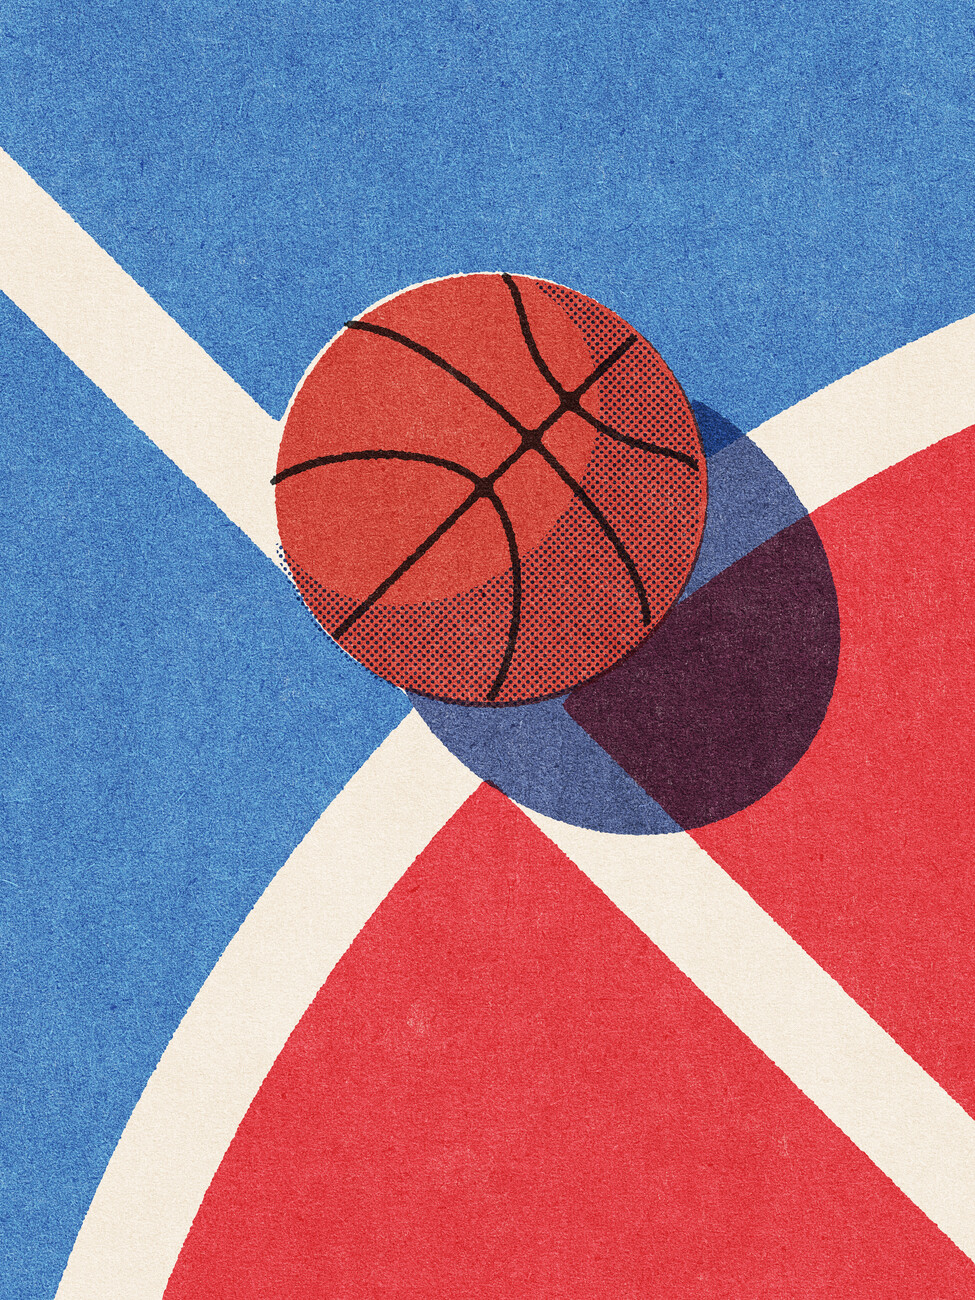 Poster Pop-Art, on Sport Theme - Basketball Outdoor, by Daniel Coulmann